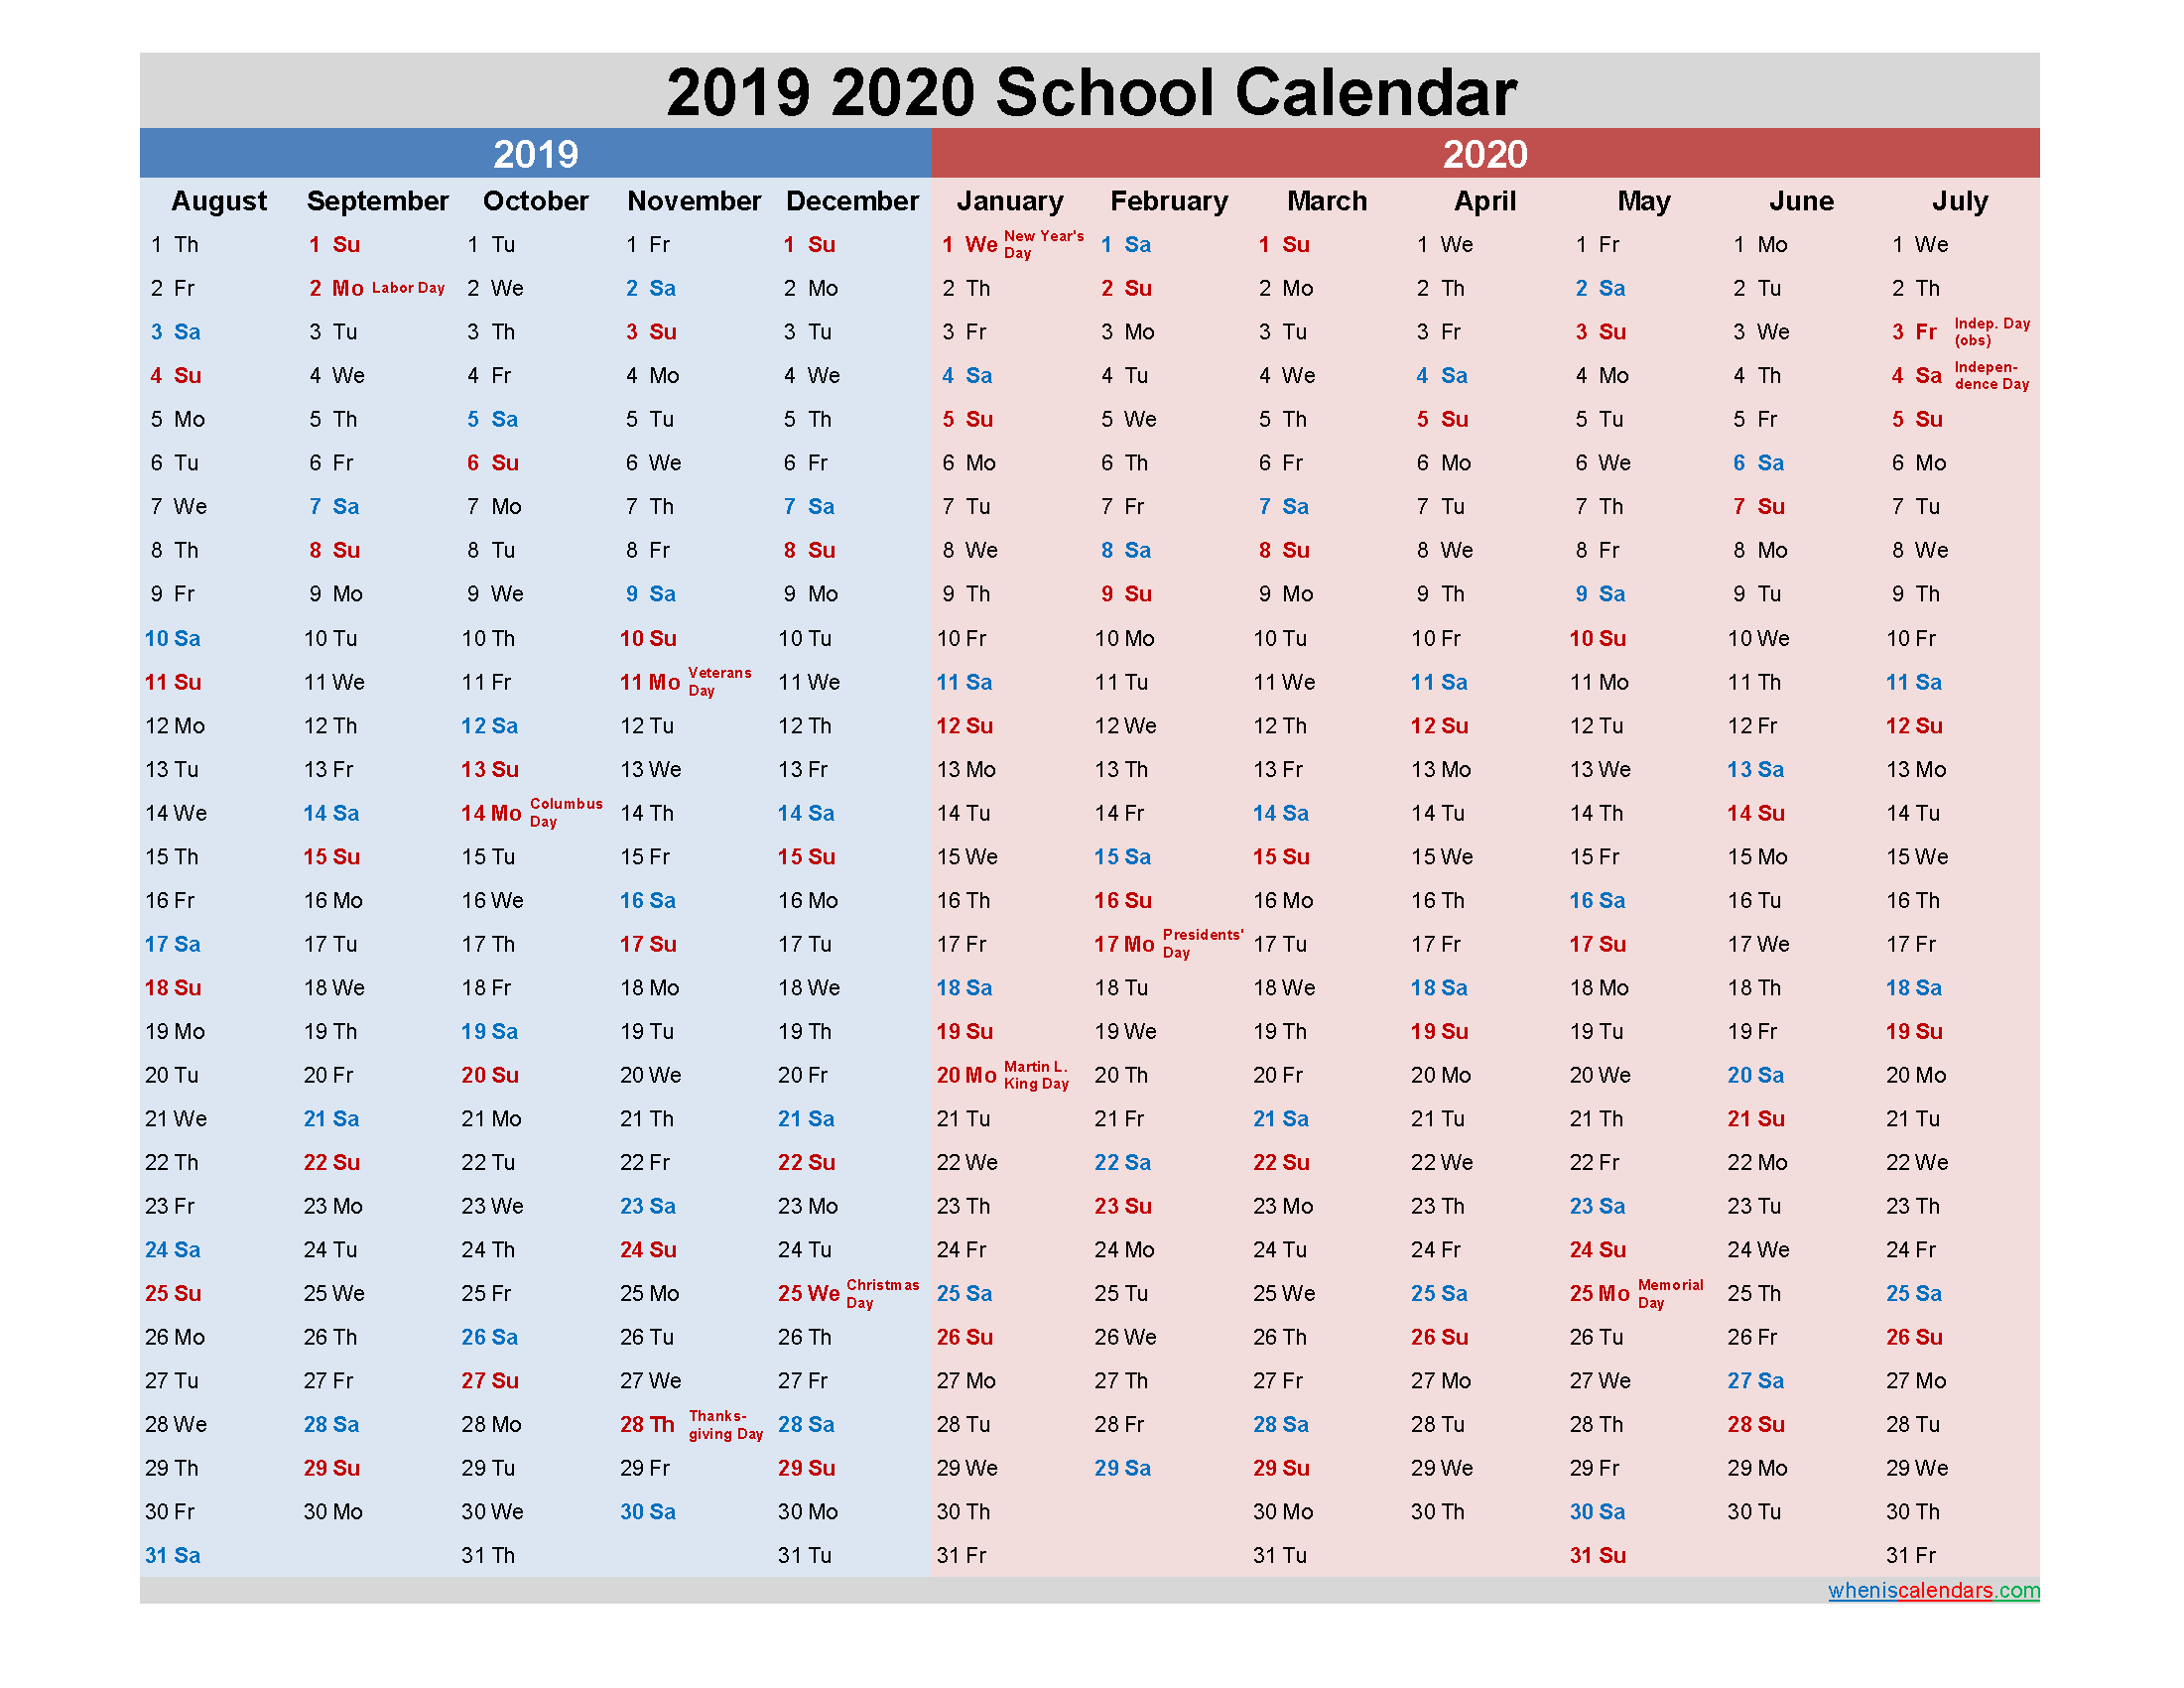 2019 and 2020 School Calendar Printable - Template No.20scl20